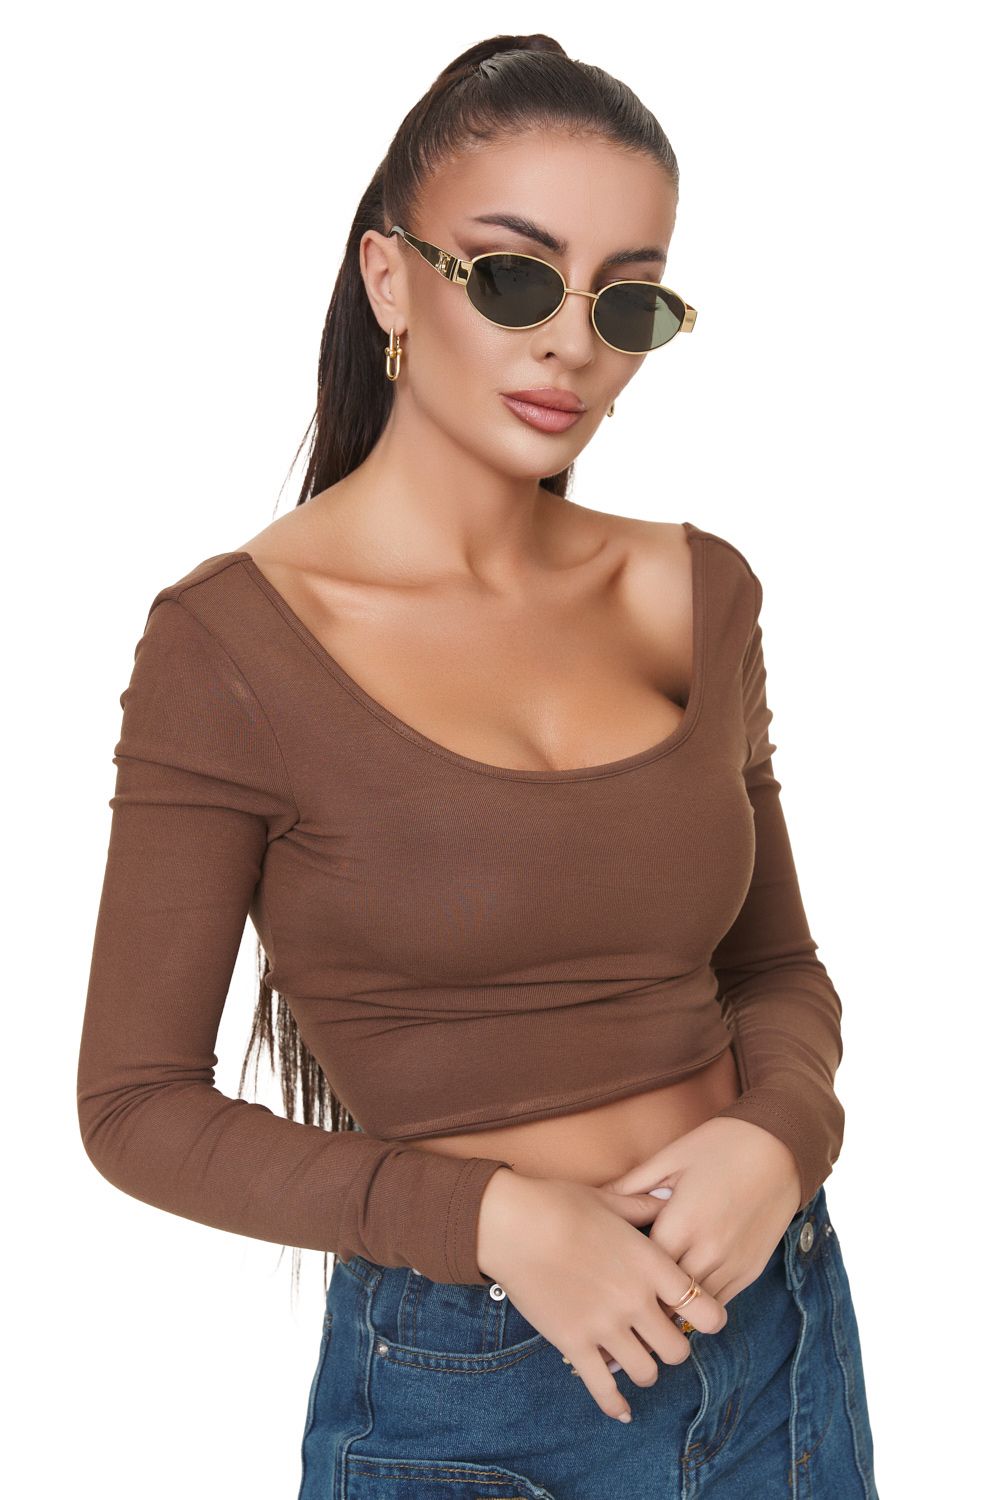 Women's casual blouse brown Zasvisa Bogas